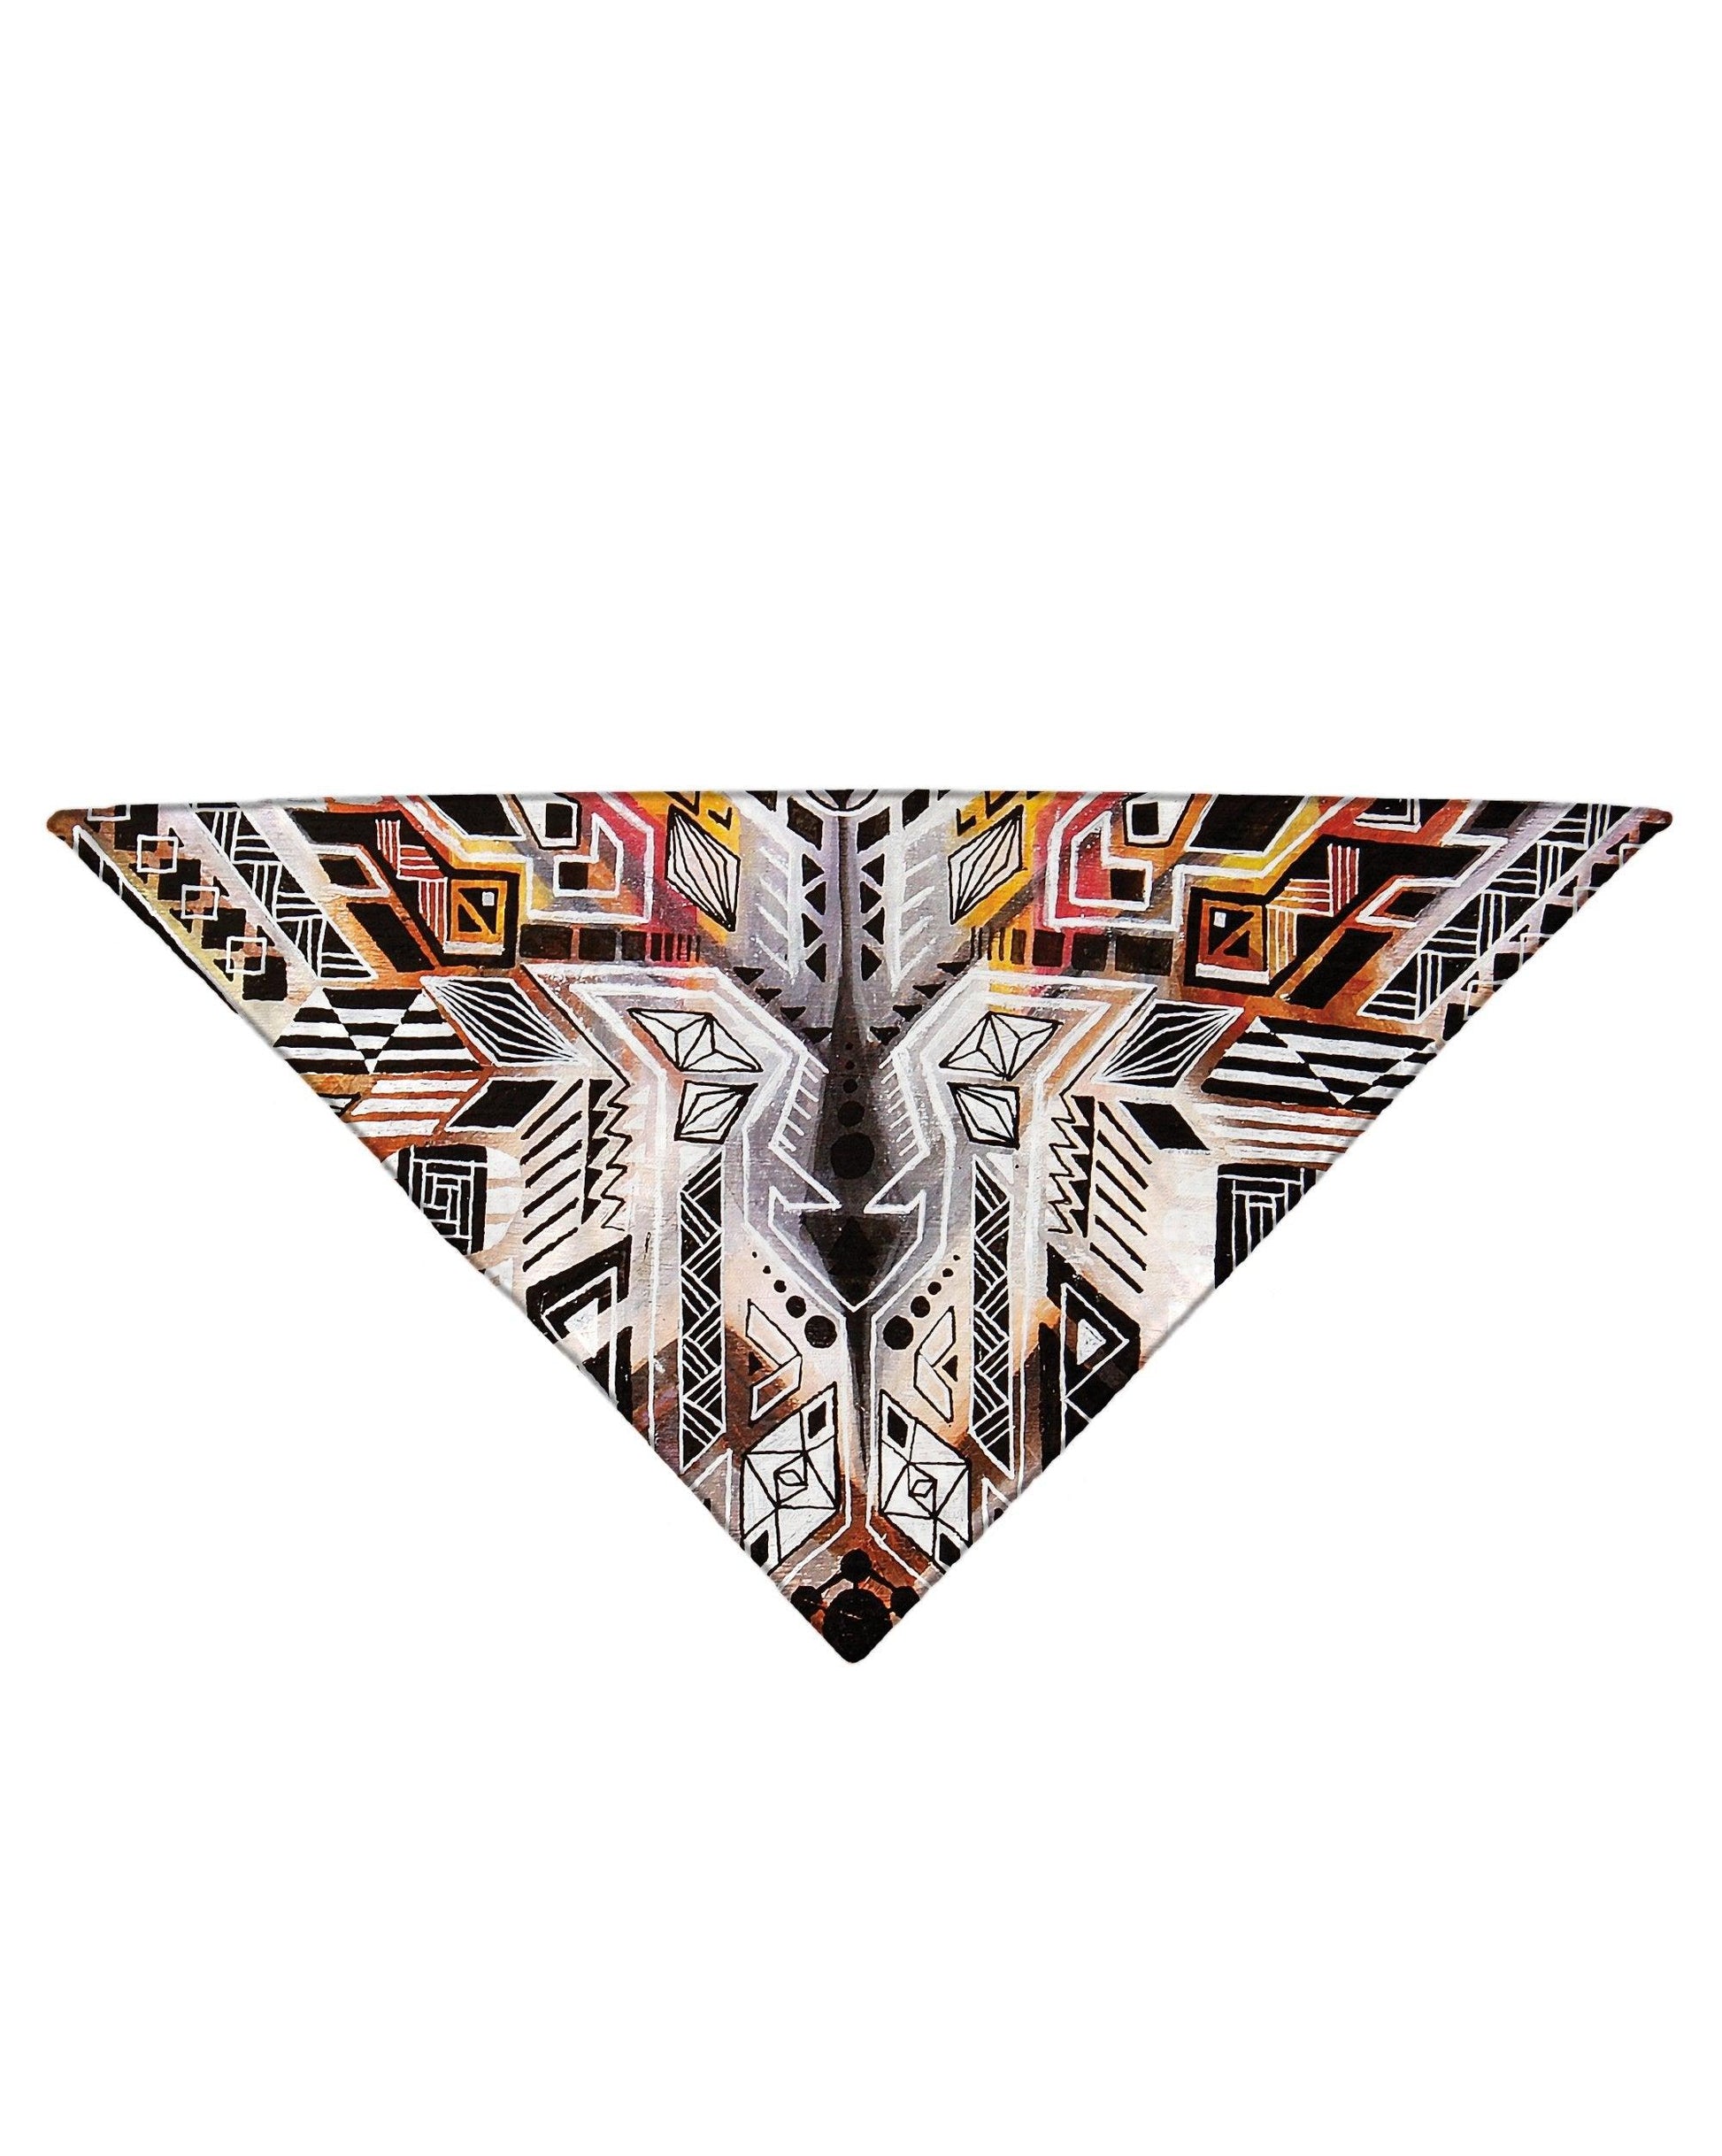 Diagonally folded psychedelic alien tech printed headband.